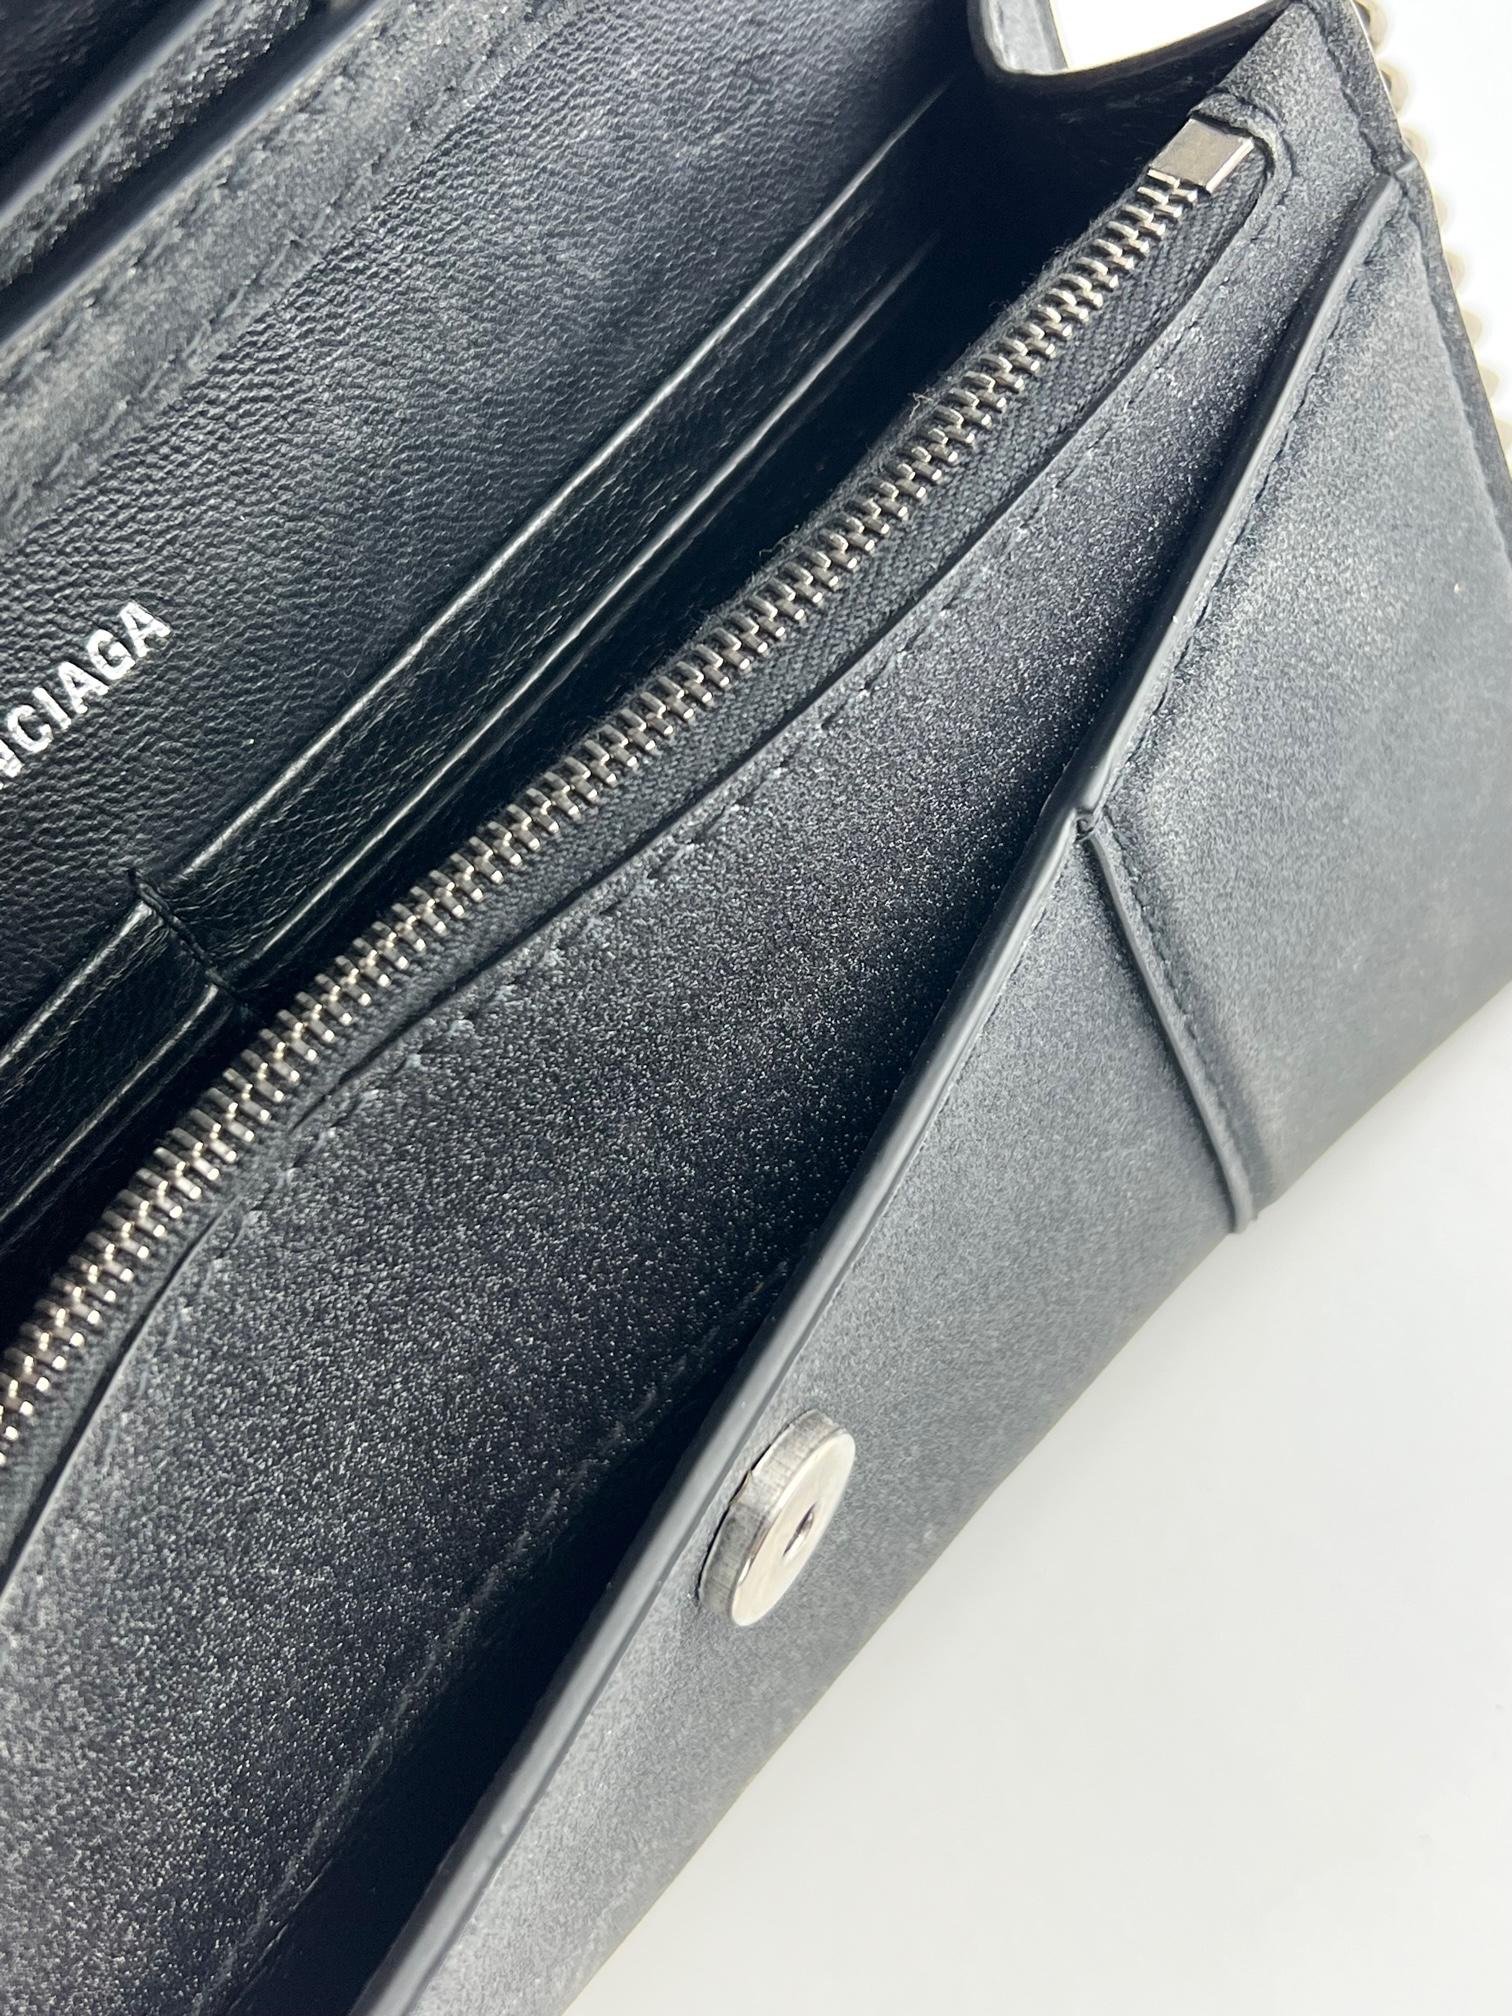 BALENCIAGA Hourglass Wallet On Chain Black Glitter Clutch Shoulder Bag For Sale 3